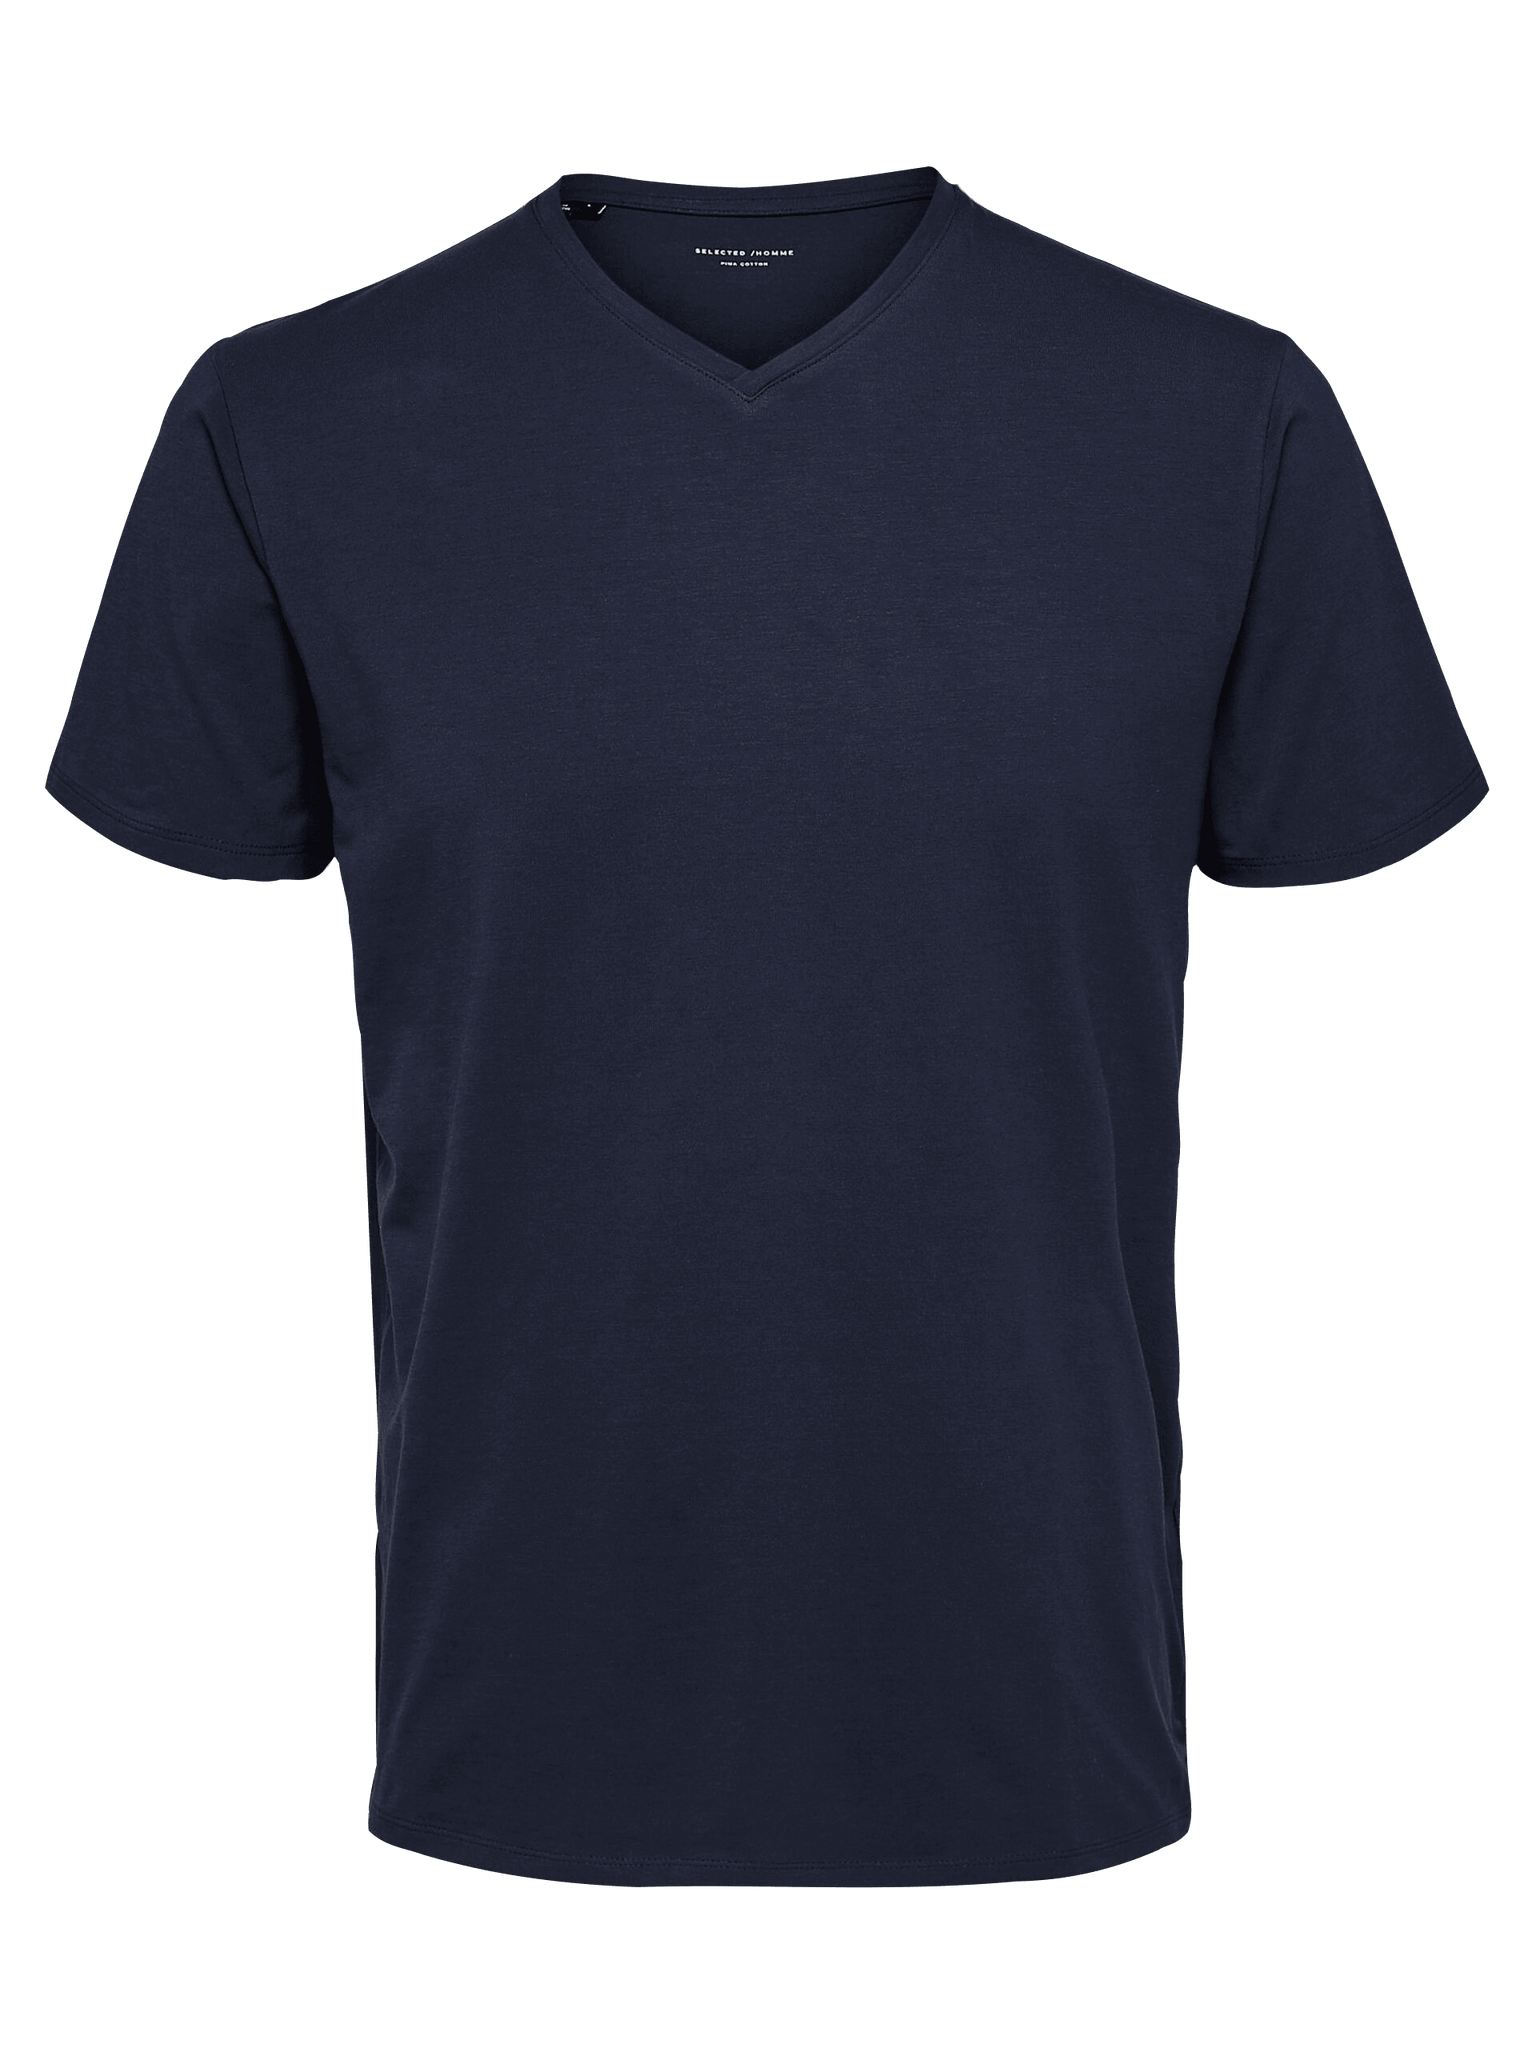 Camiseta New Pima Cuello Pico Navy Blazer - ECRU